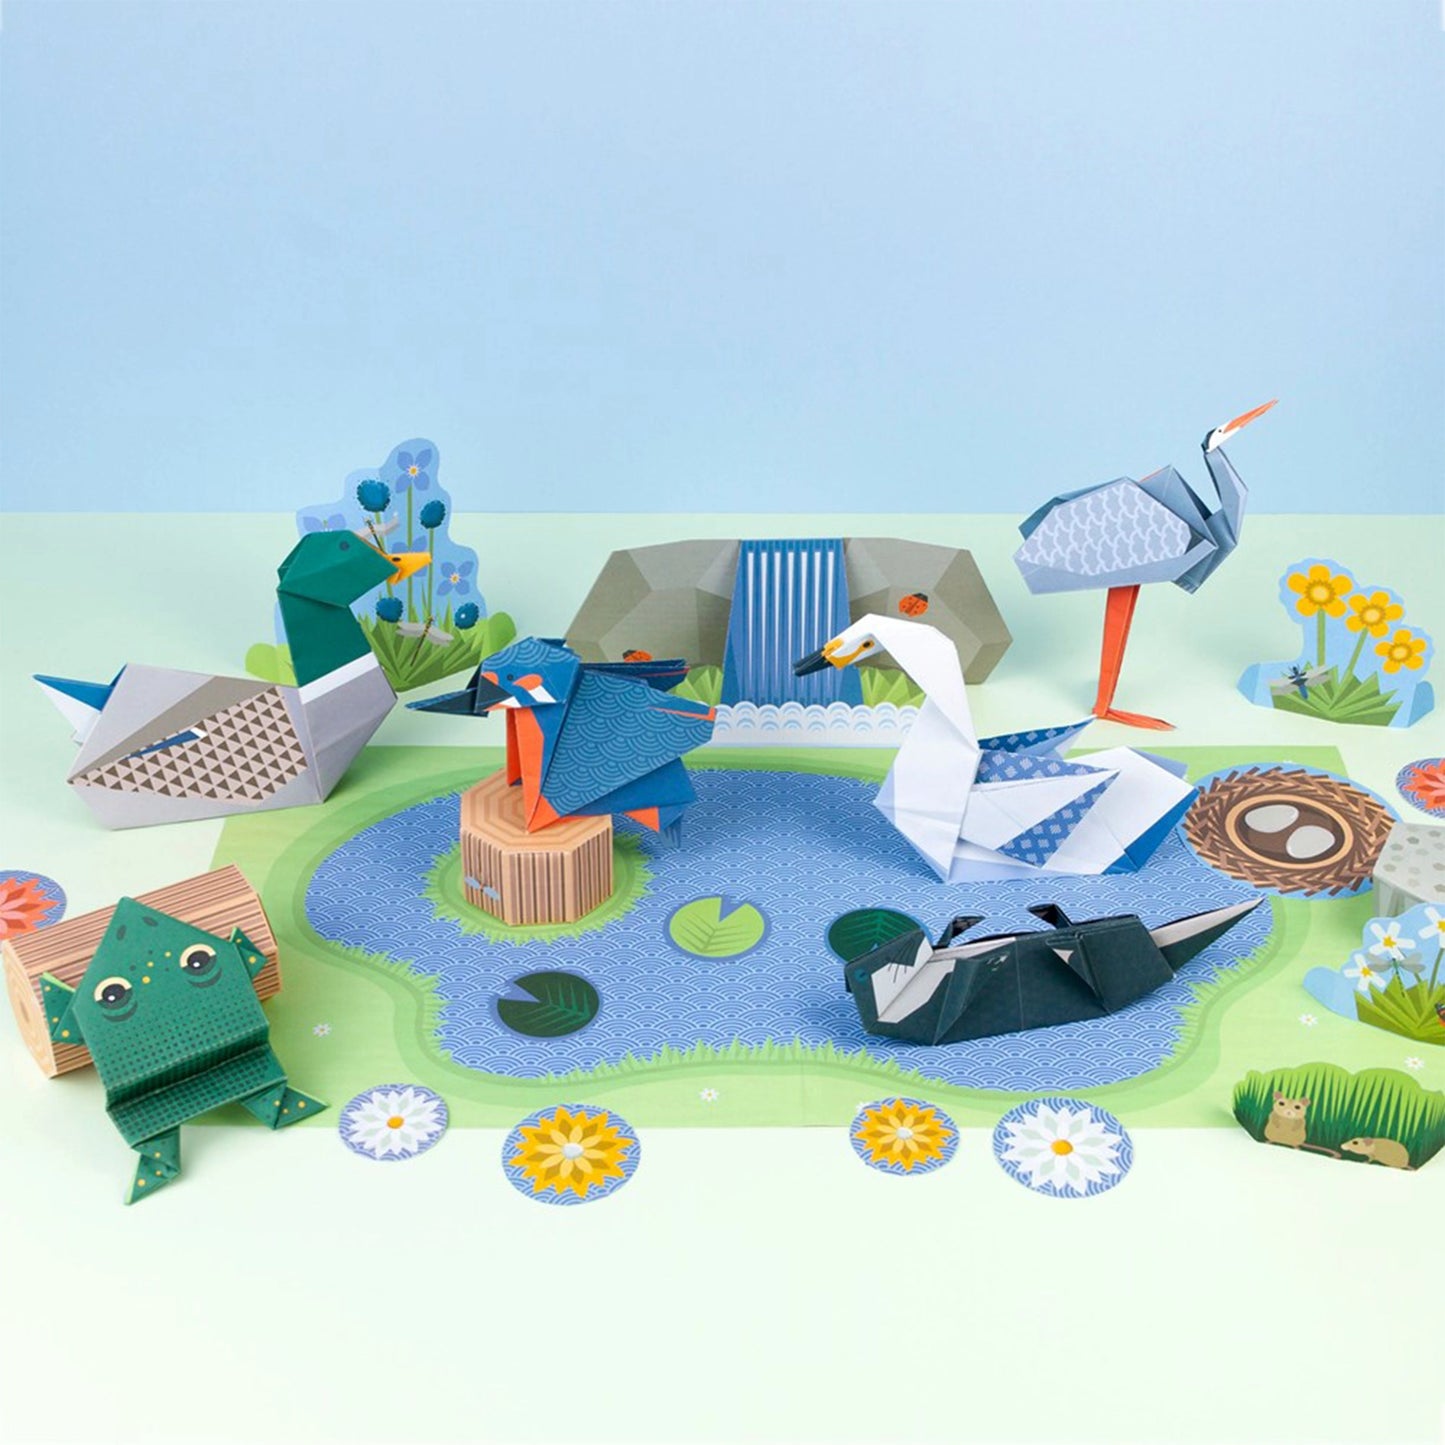 Wetland Wildlife Origami - Clockwork Soldier - The Forgotten Toy Shop